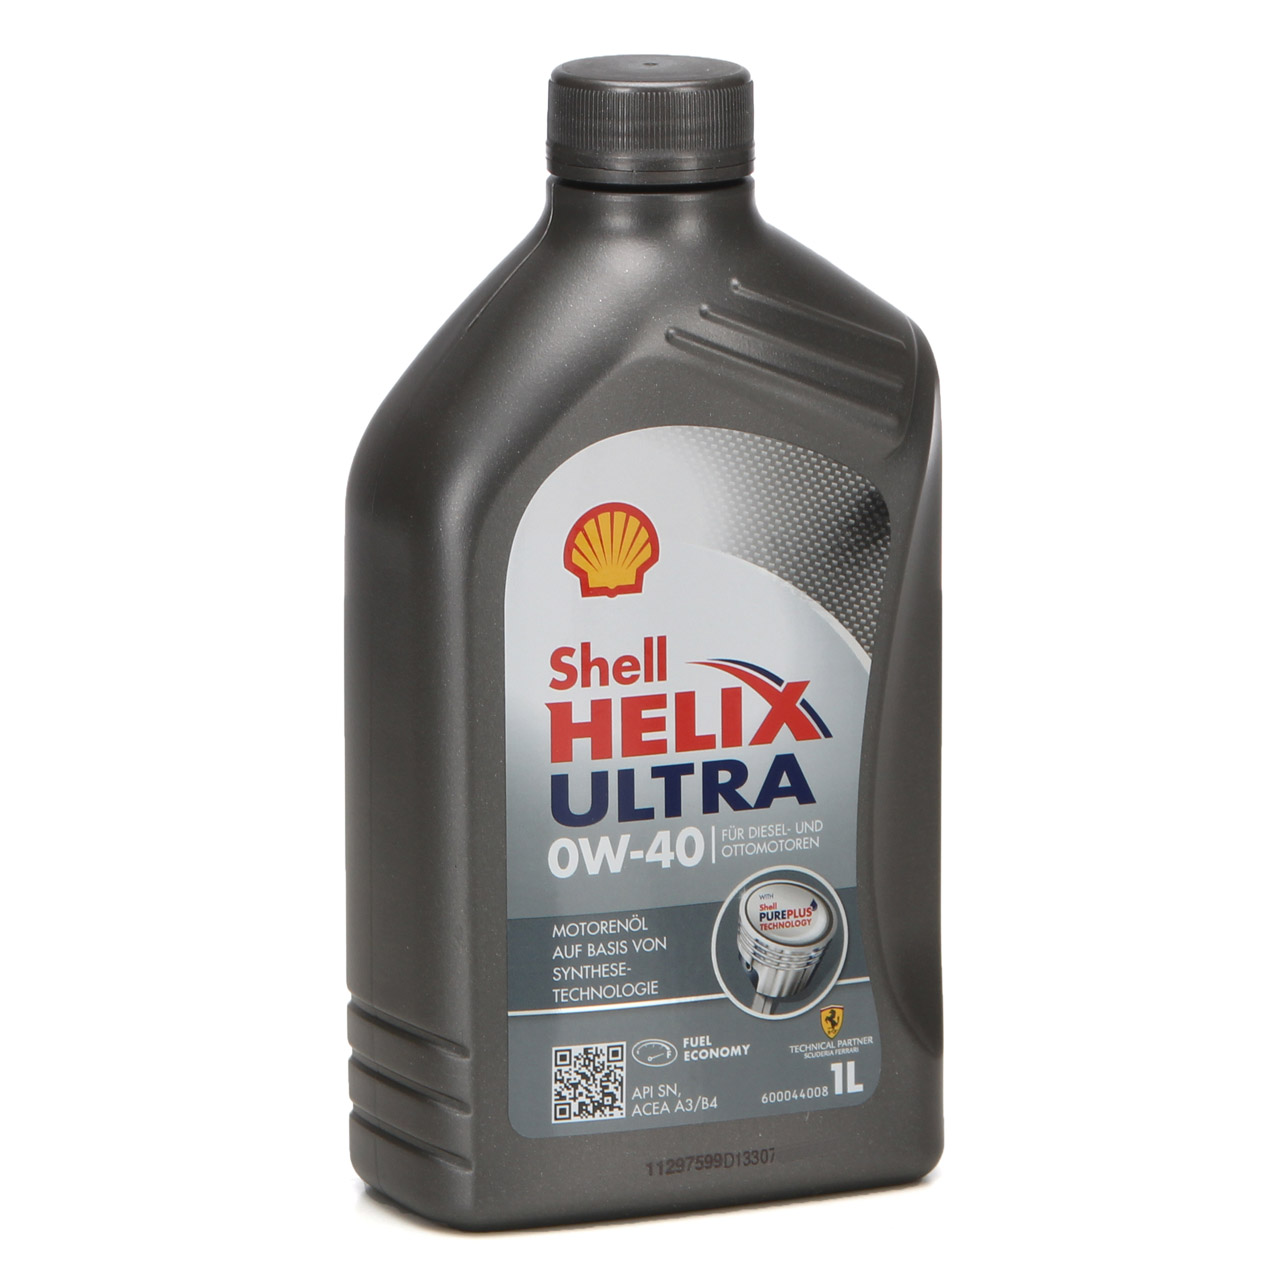 7x 1 Liter SHELL HELIX ULTRA 0W-40 Motoröl Öl MB 229.5/226.5 VW 502.00/505.00